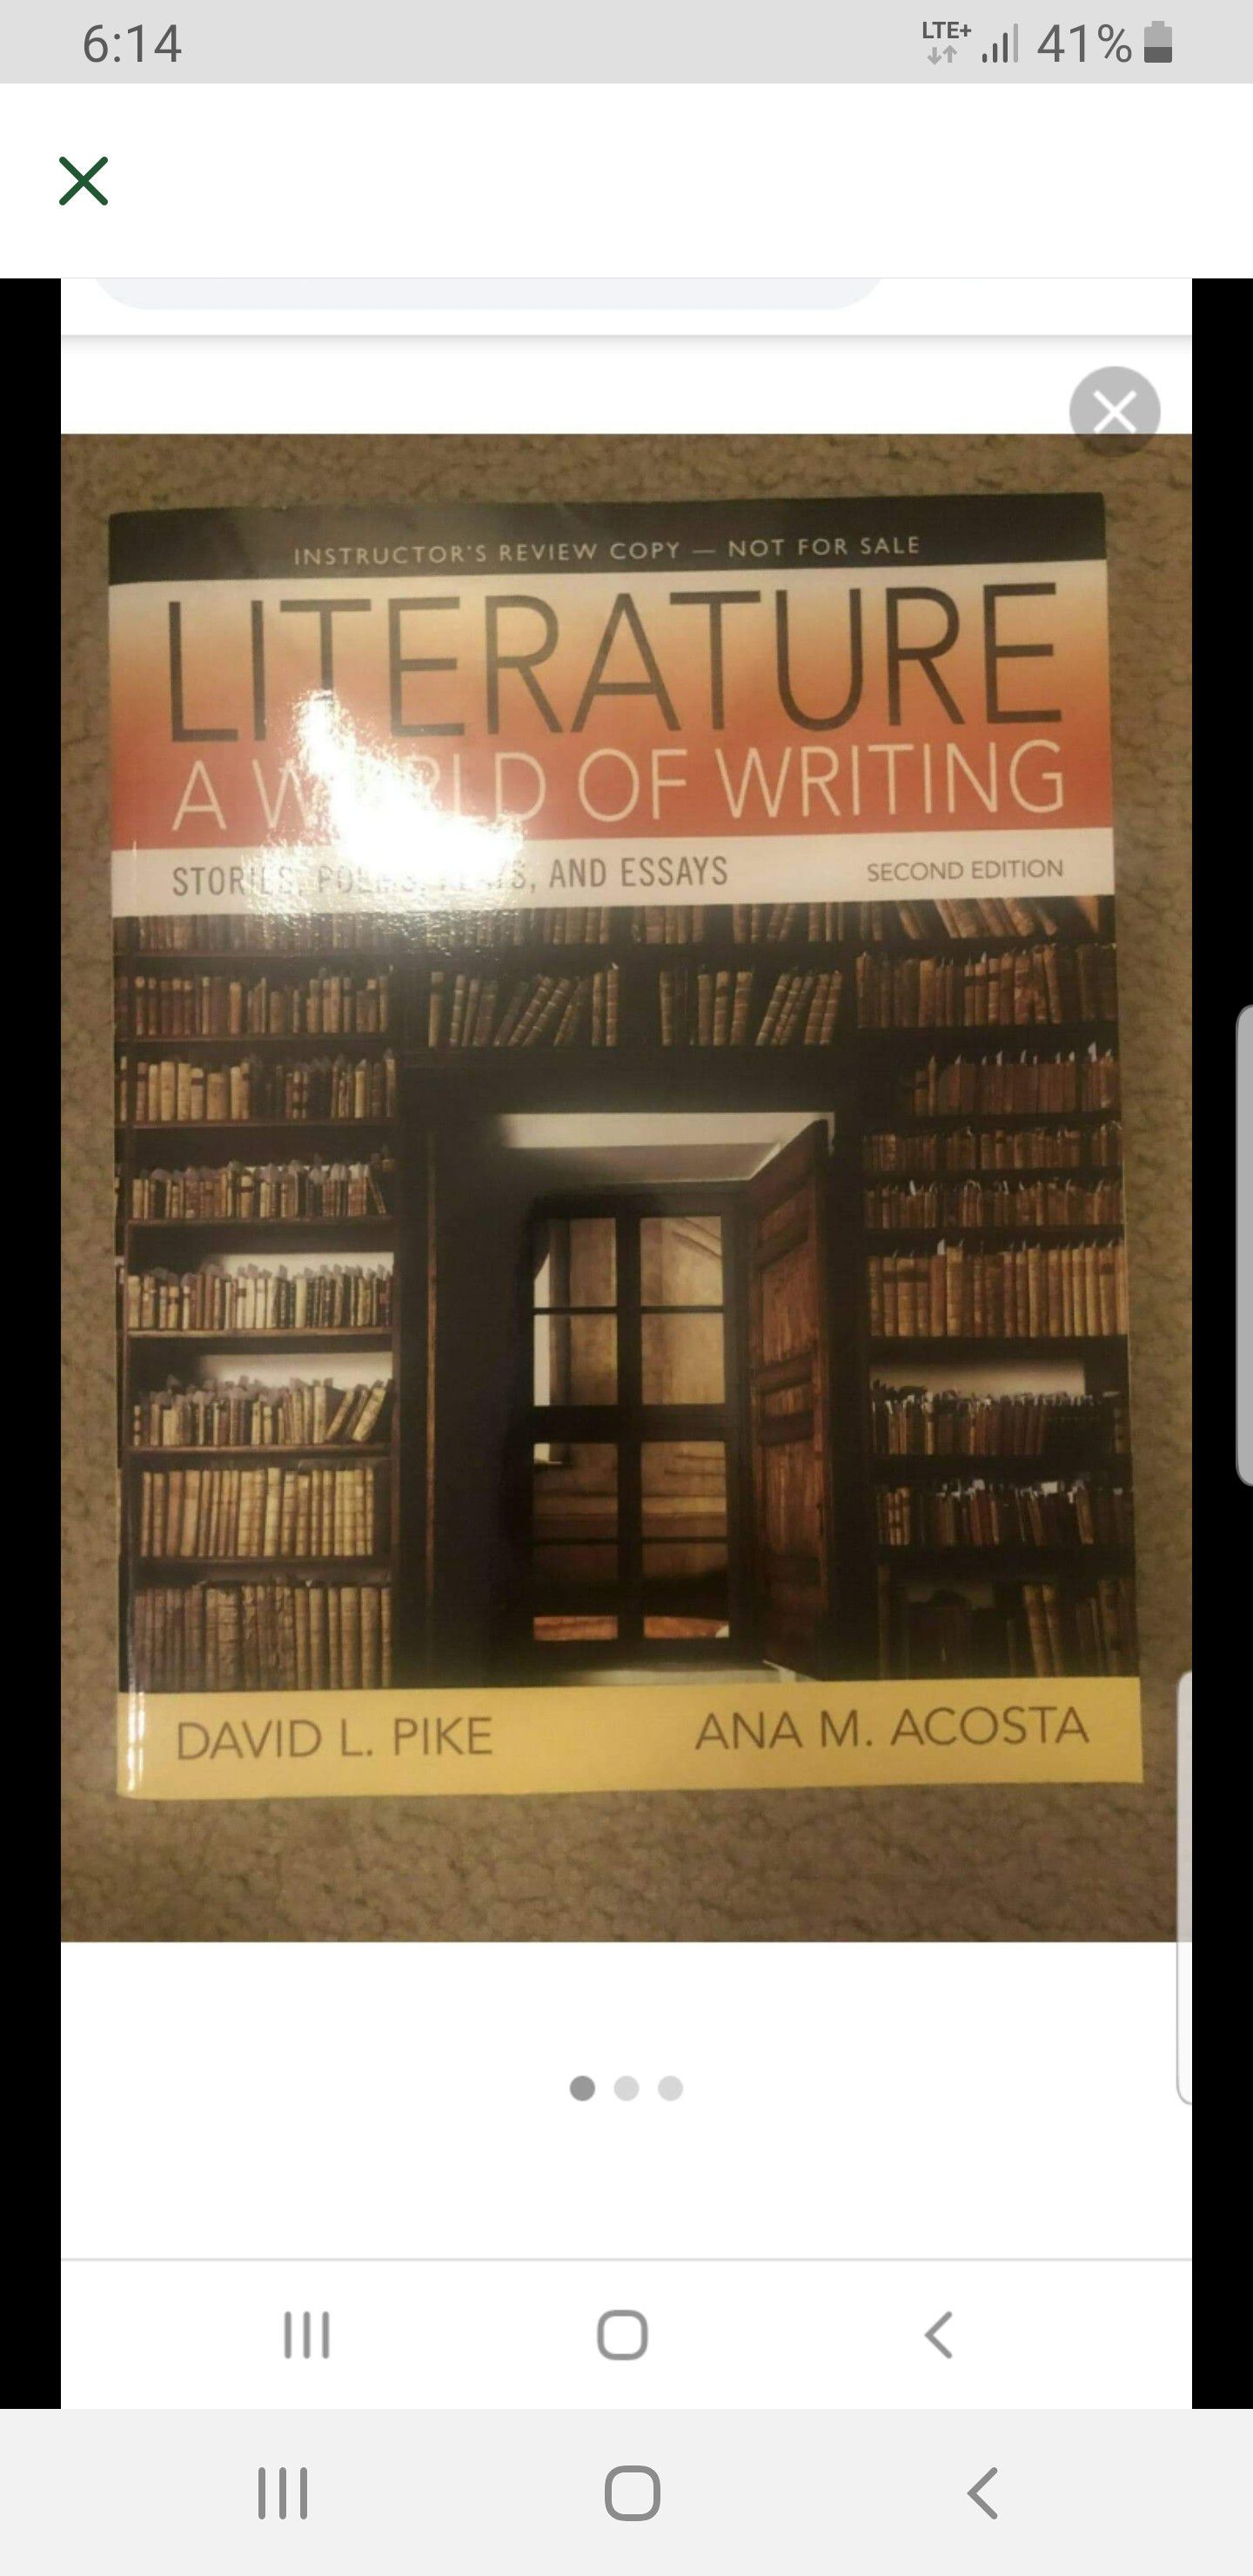 Literature a world of writing